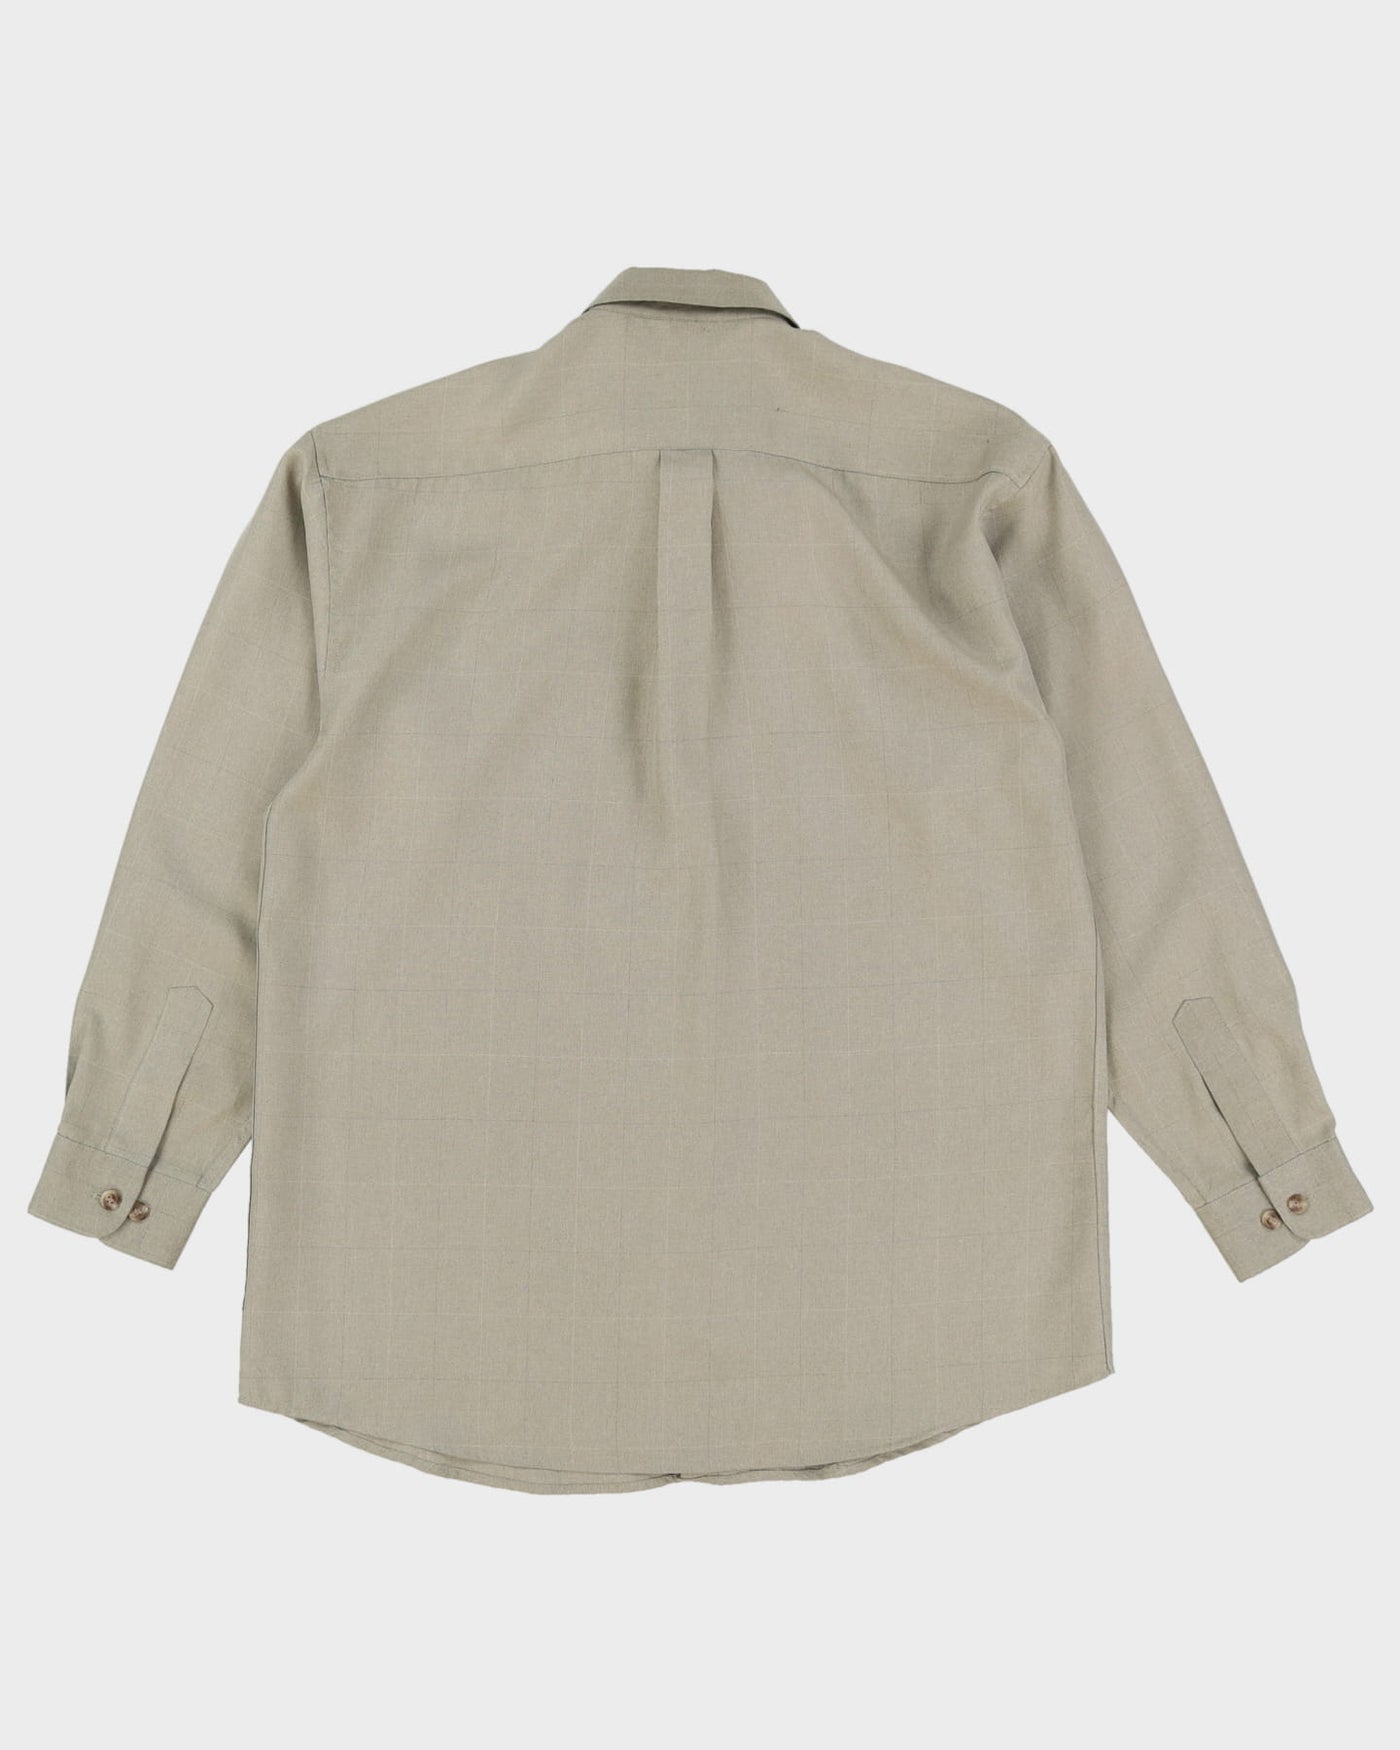 Valentino Grey Patterned Long Sleeve Shirt - XL